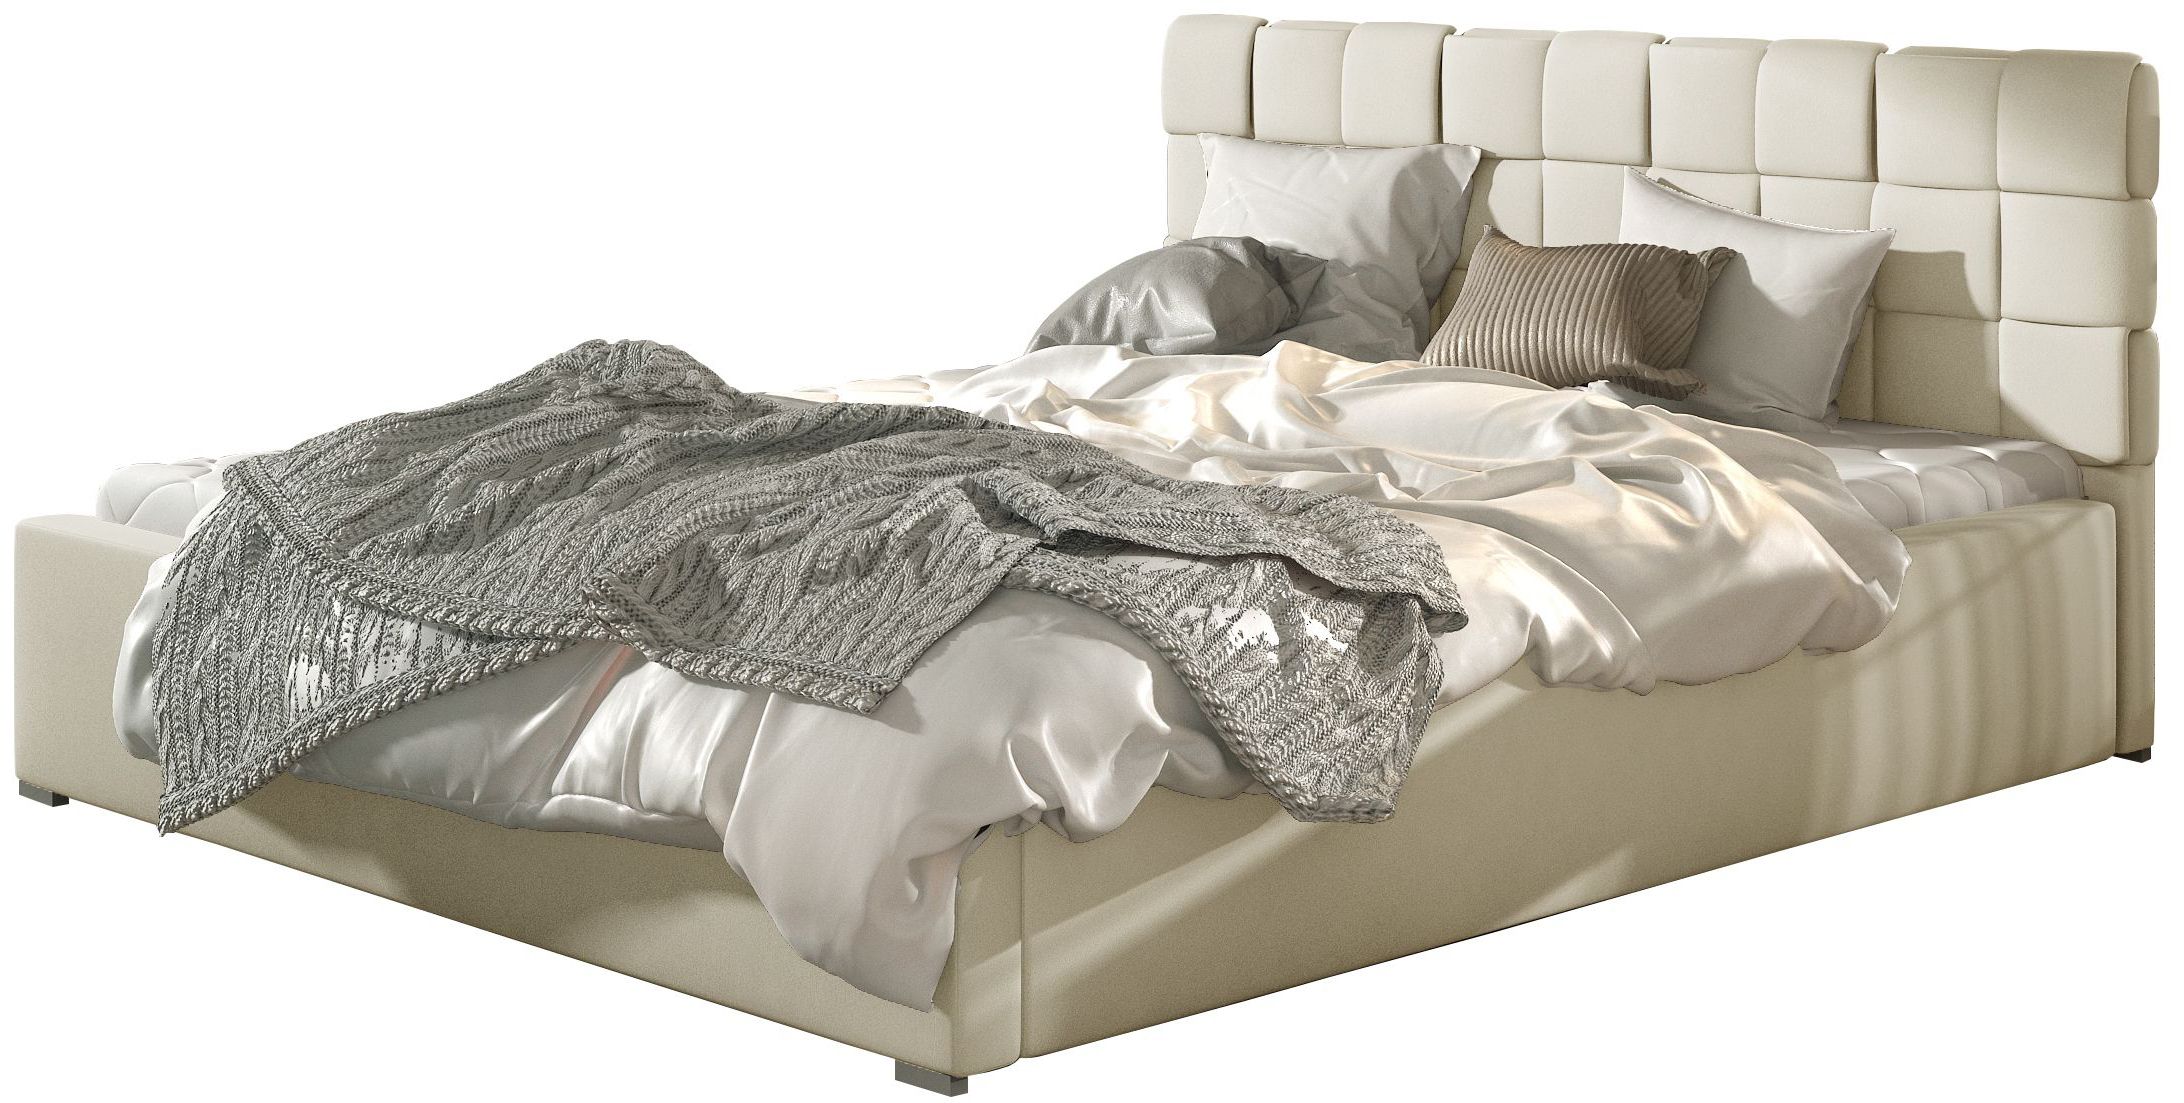 PoliHome Επενδυμένο κρεβάτι Grady-140 x 200-Με μηχανισμό ανύψωσης-Mpez